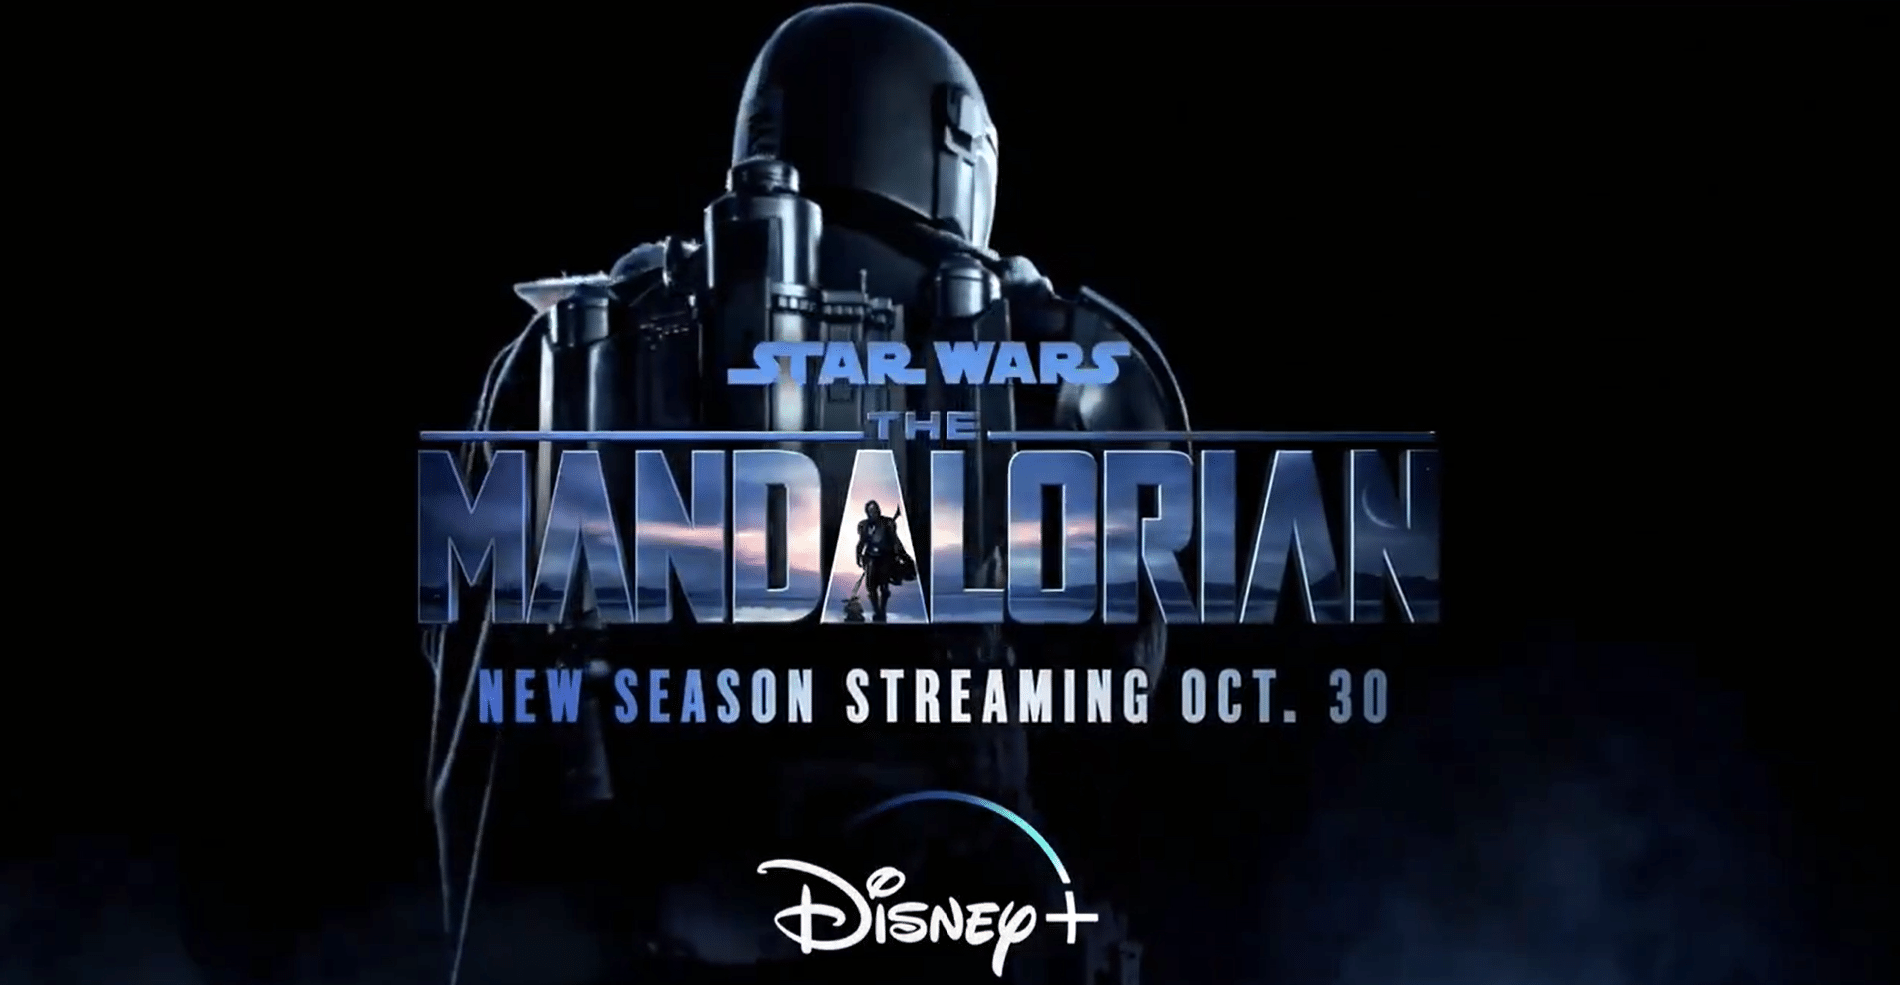 The Mandalorian season 2 teaser videos